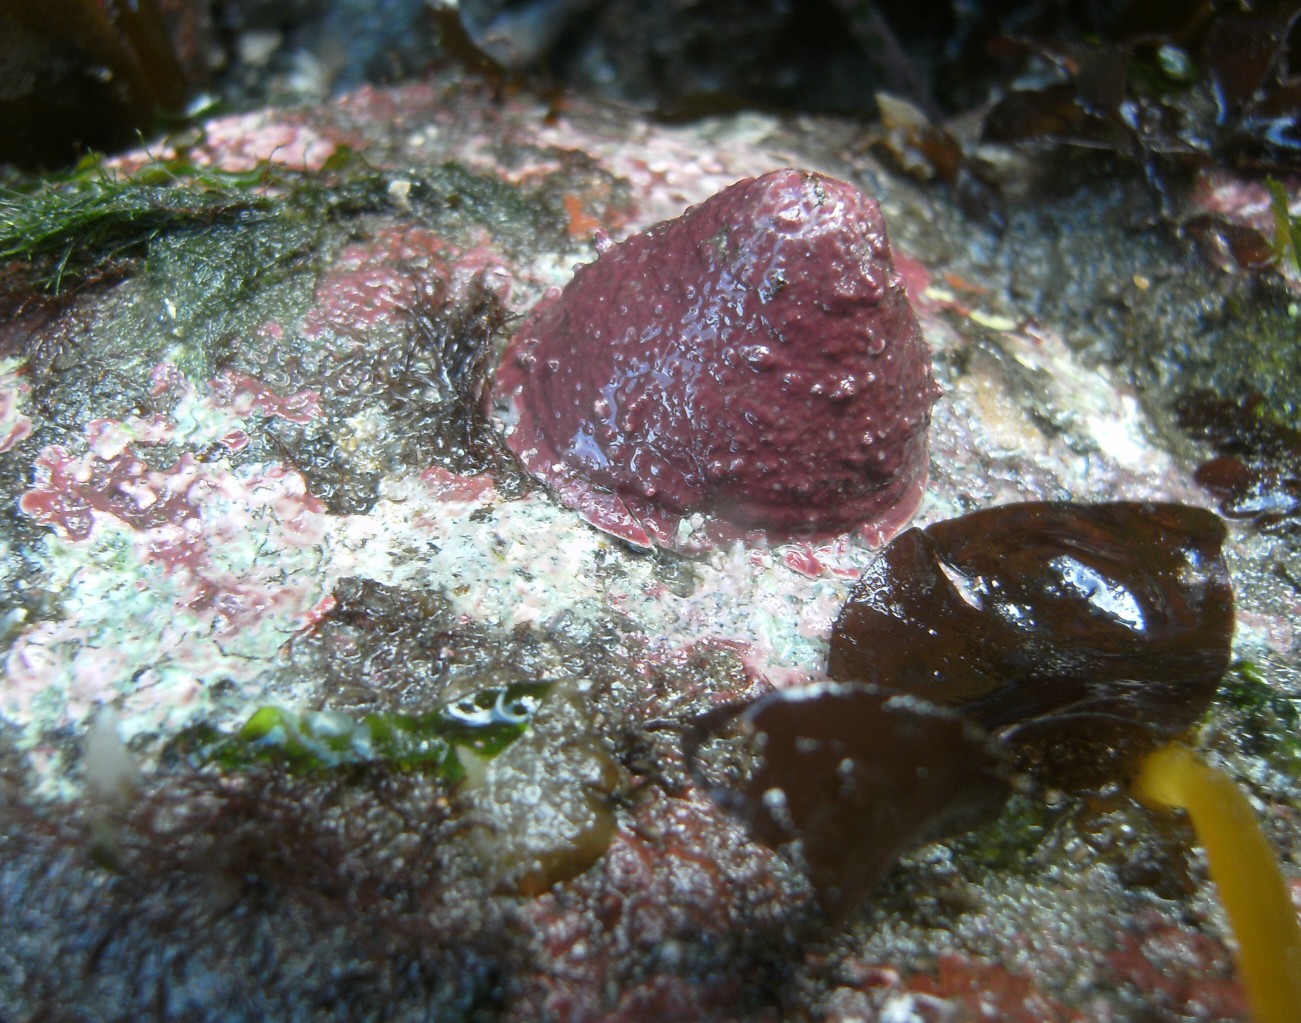 With coralline algae